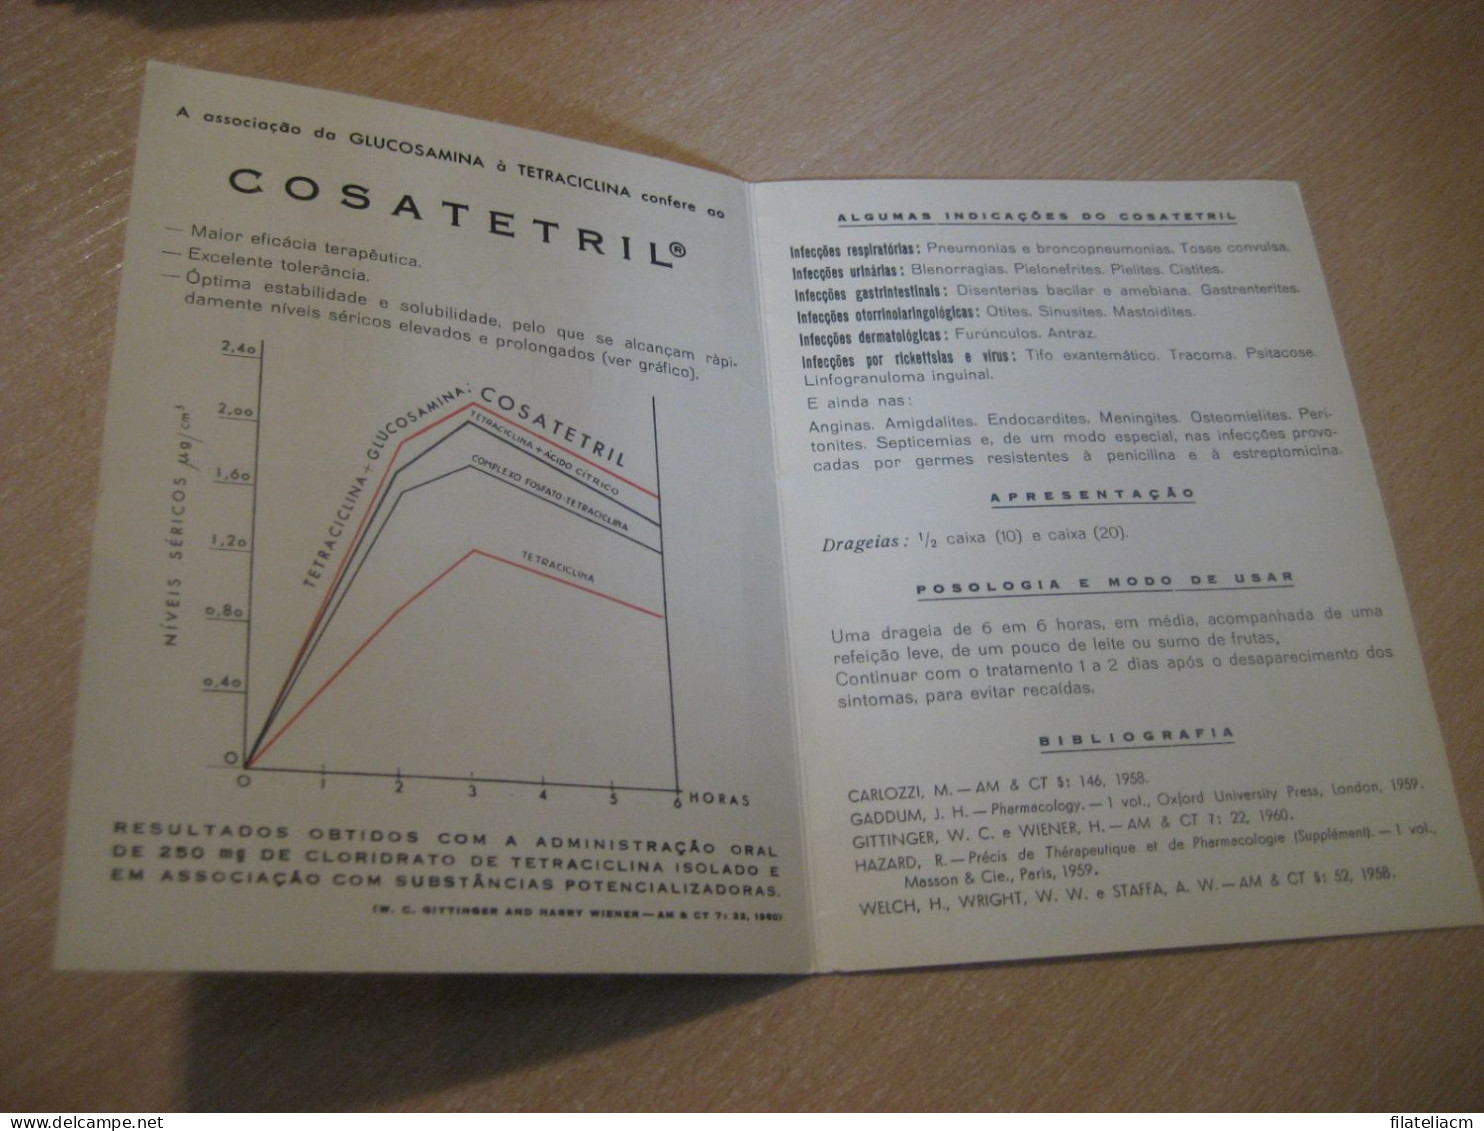 PORTO 1961 To Figueira Da Foz BIAL Cosatetril Tetraciclina Glucosamina Pharmacy Health Meter Mail Document Card PORTUGAL - Brieven En Documenten